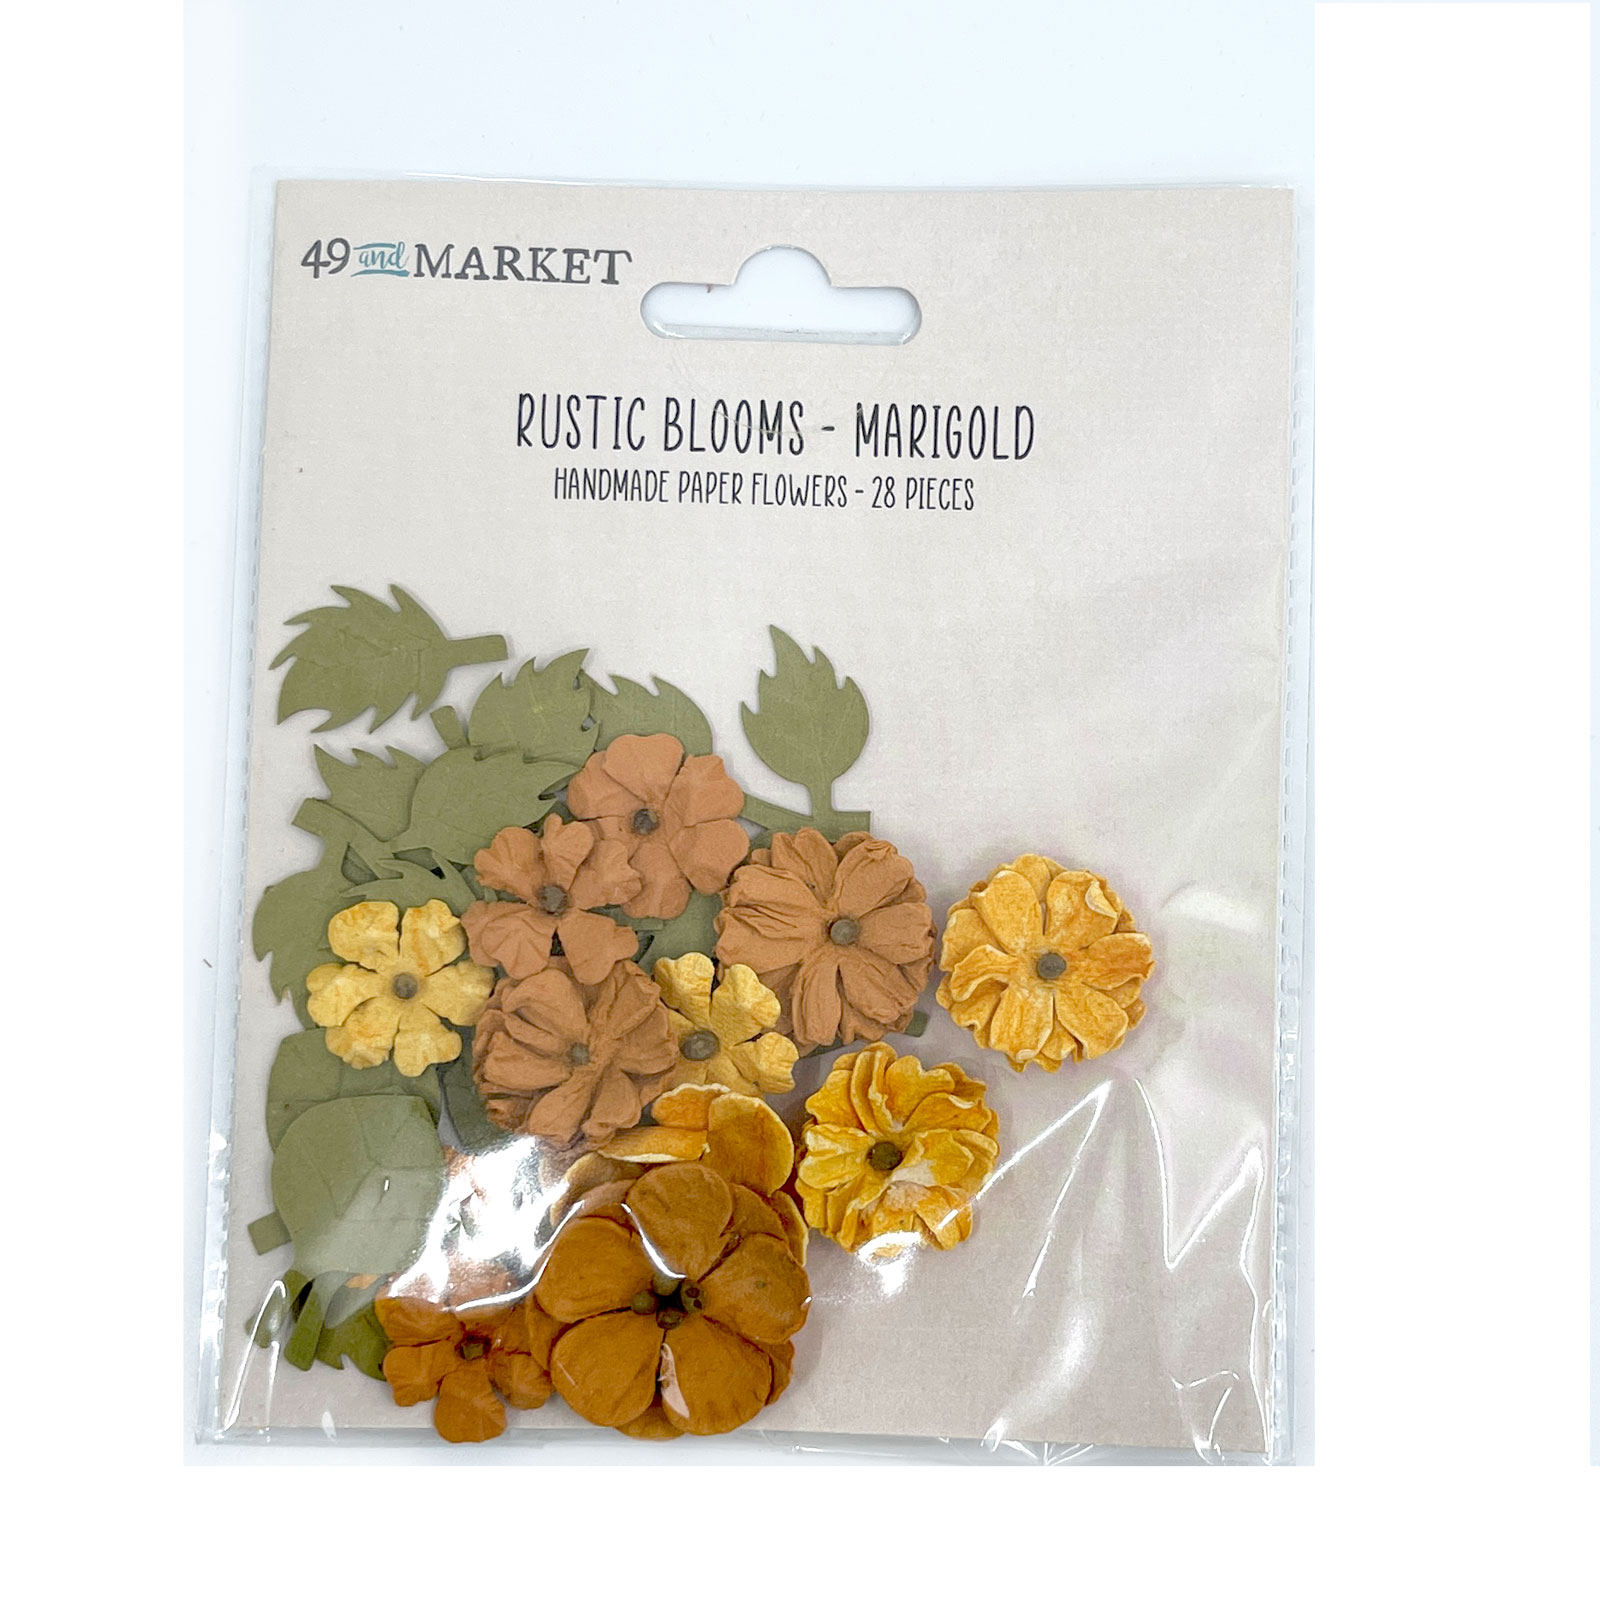 RB-34901 Rustic Blooms Marigold